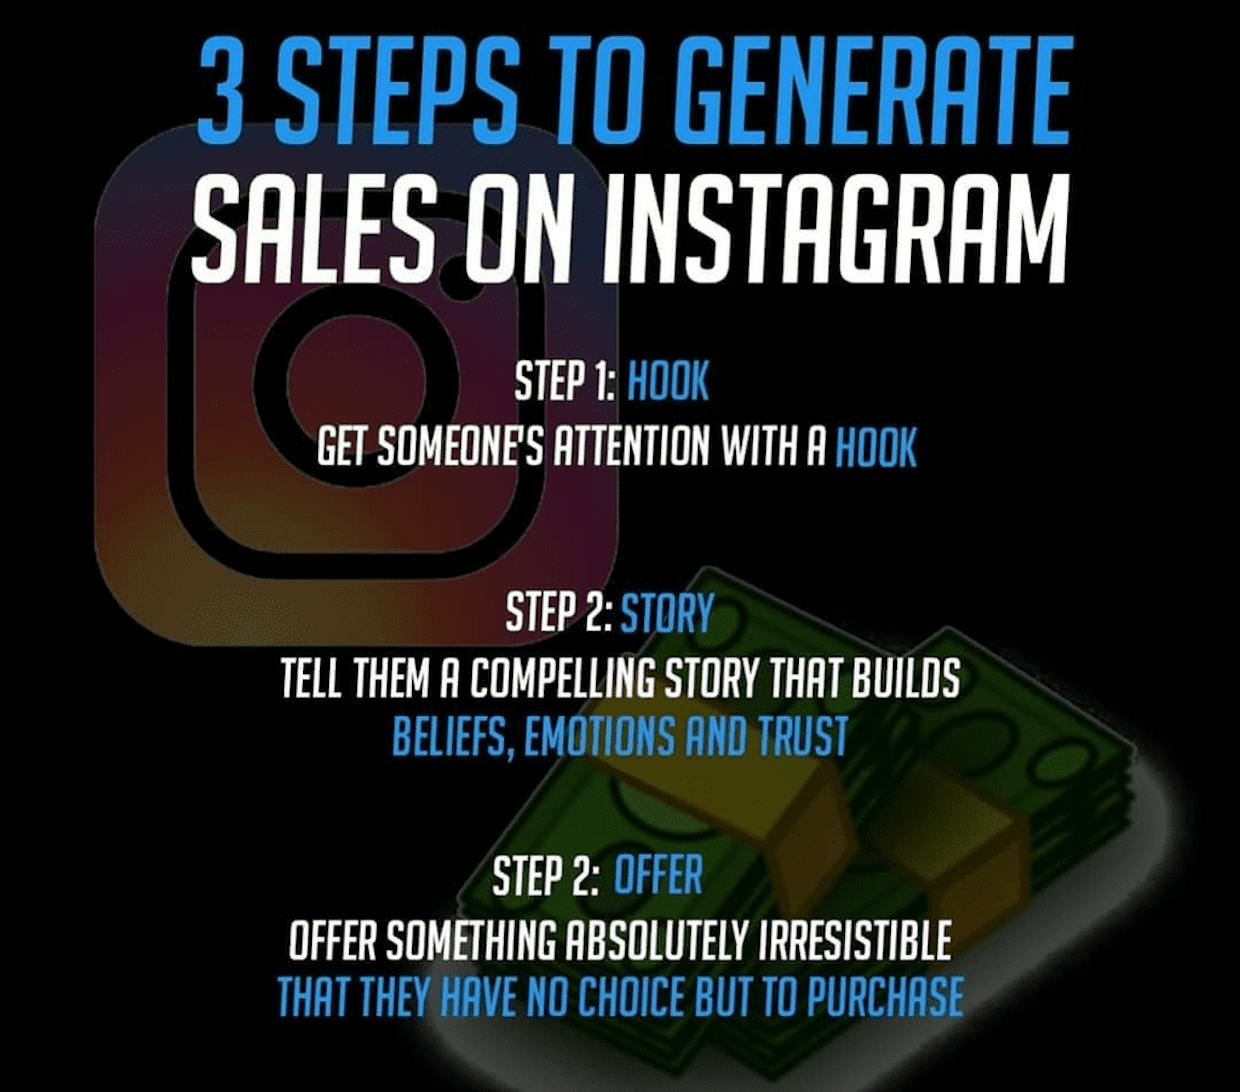 Steps to increase sales on Instagram 